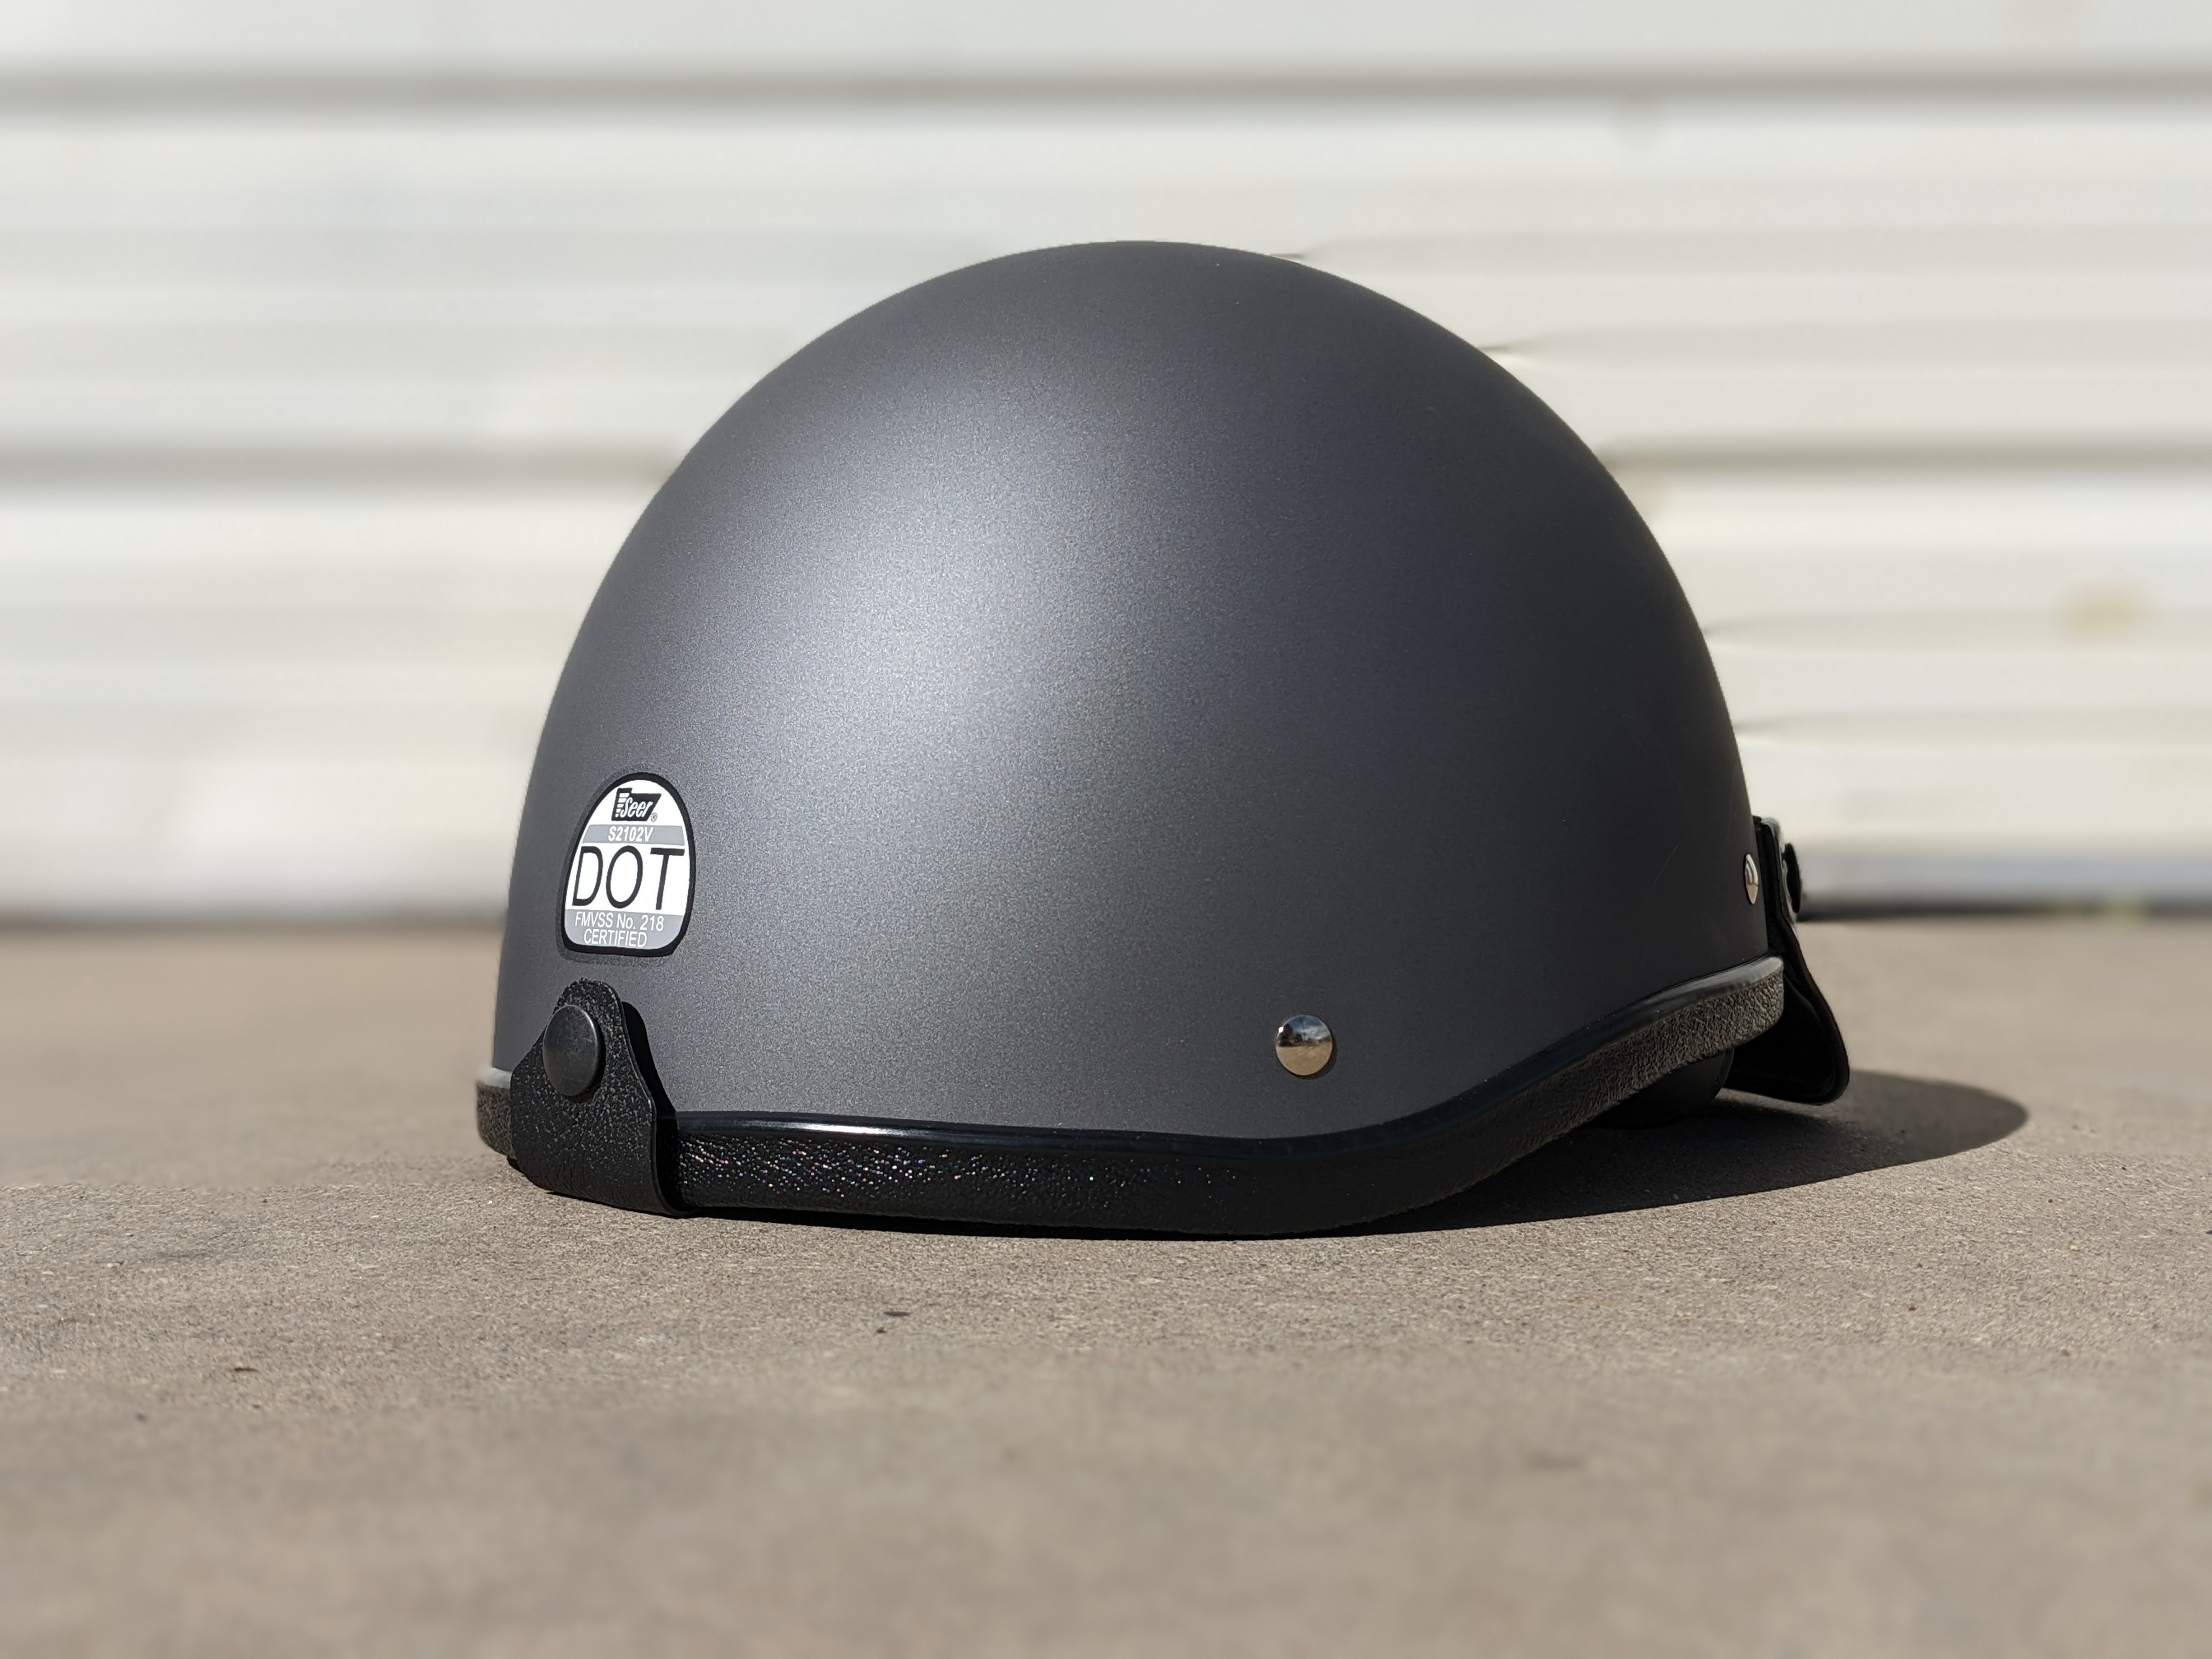 
Harley-Davidson Denim Painted Helmets